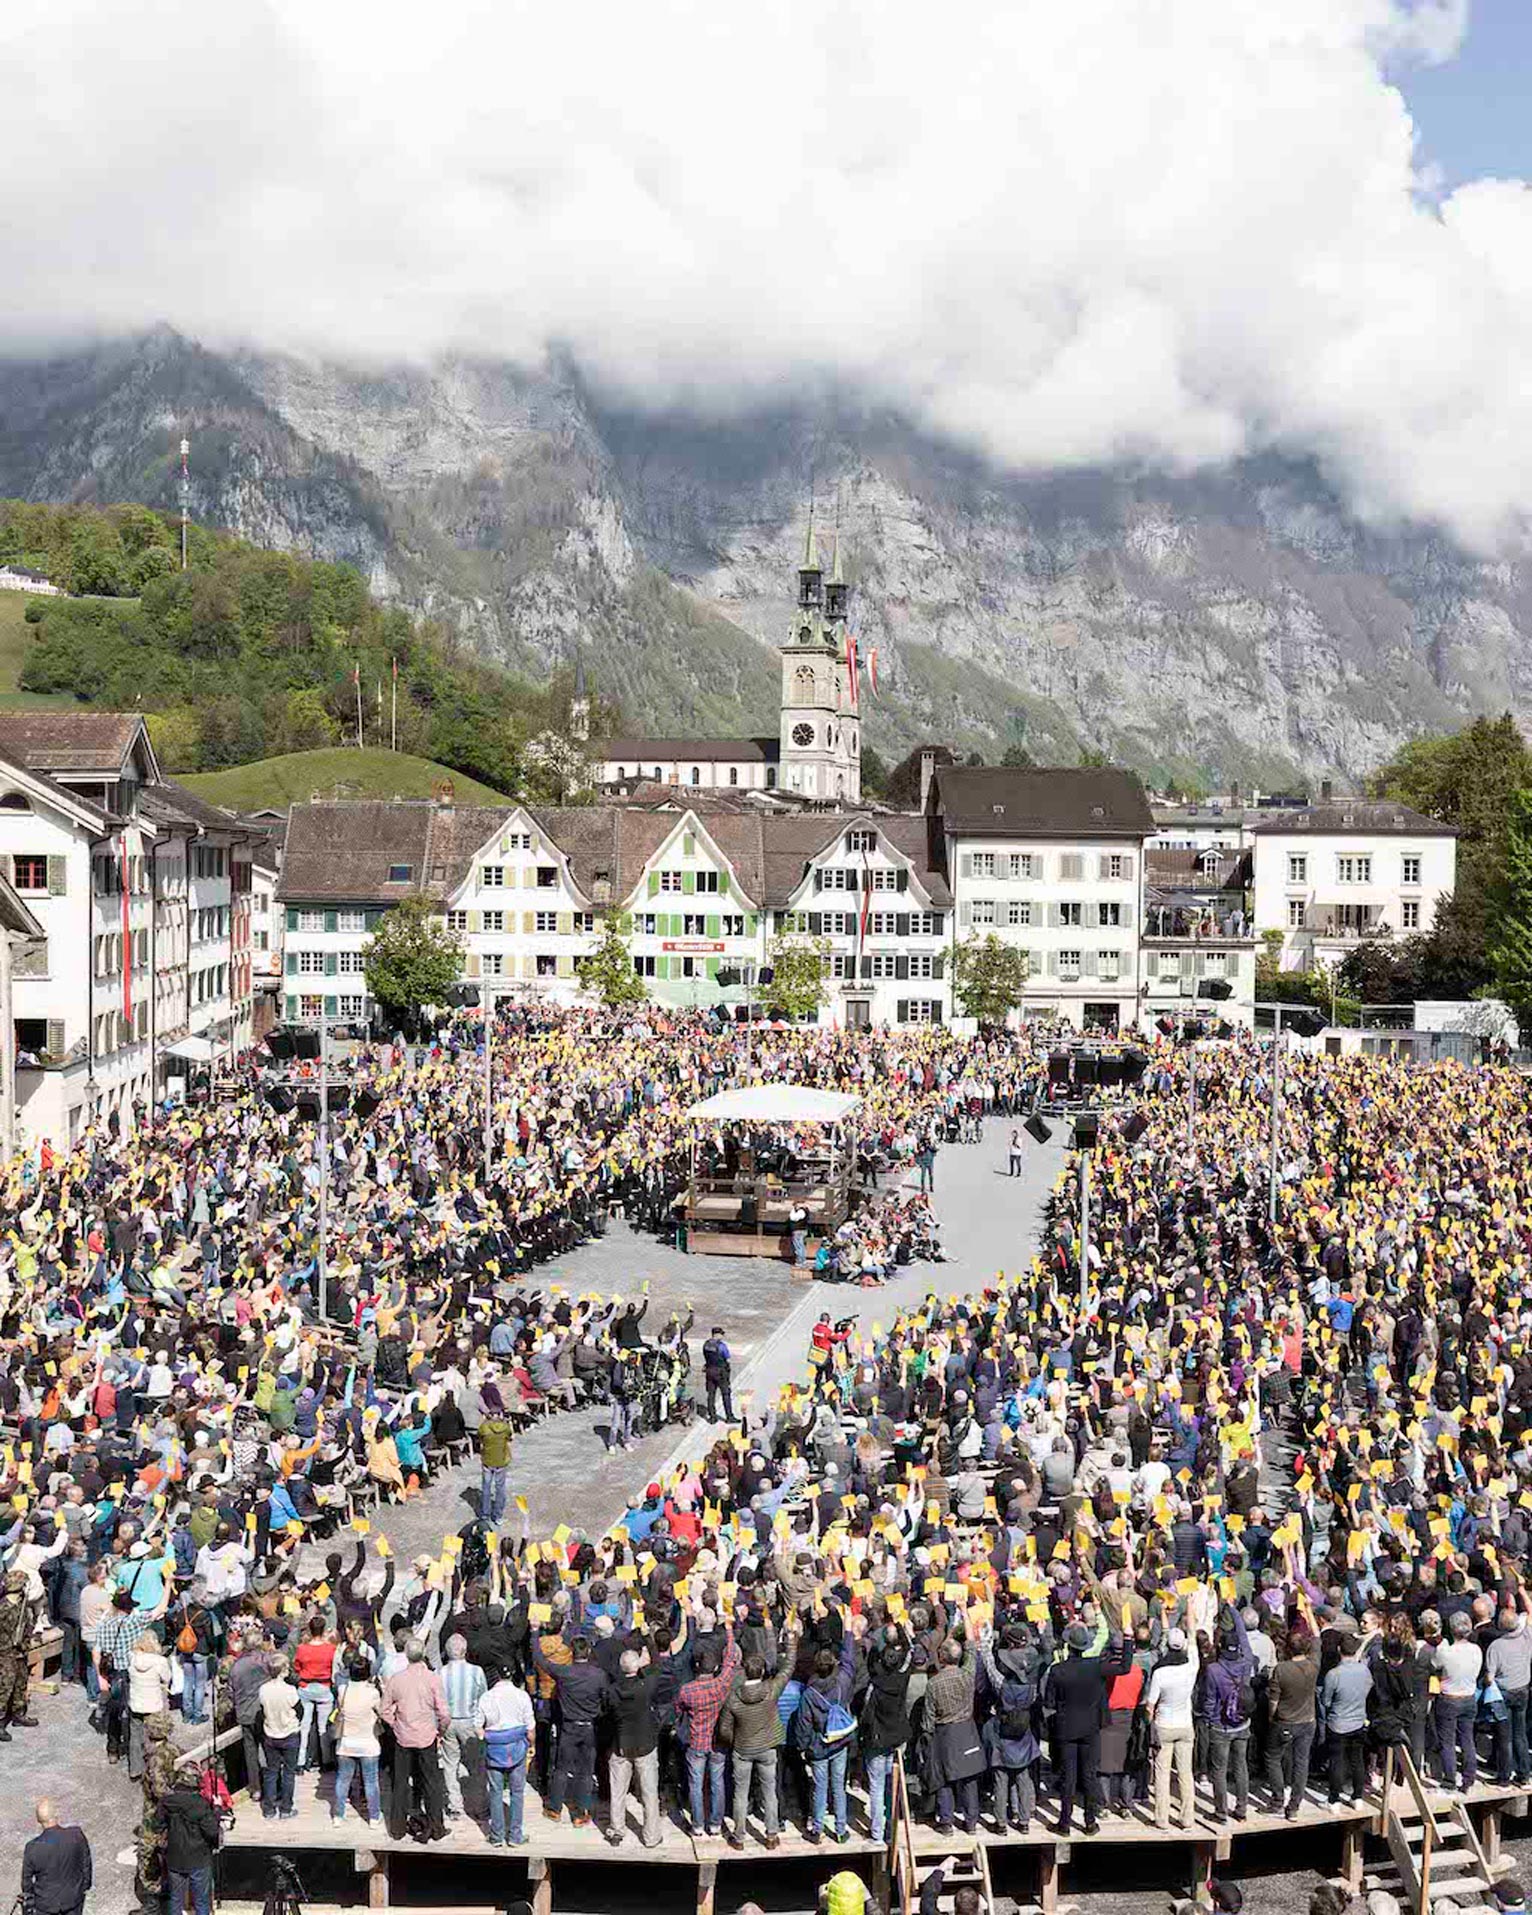 Glarner Landsgemeinde. For many political scientists, direct democracy in Switzerland is a mystery. Photo by landsgemeinde.gl.ch